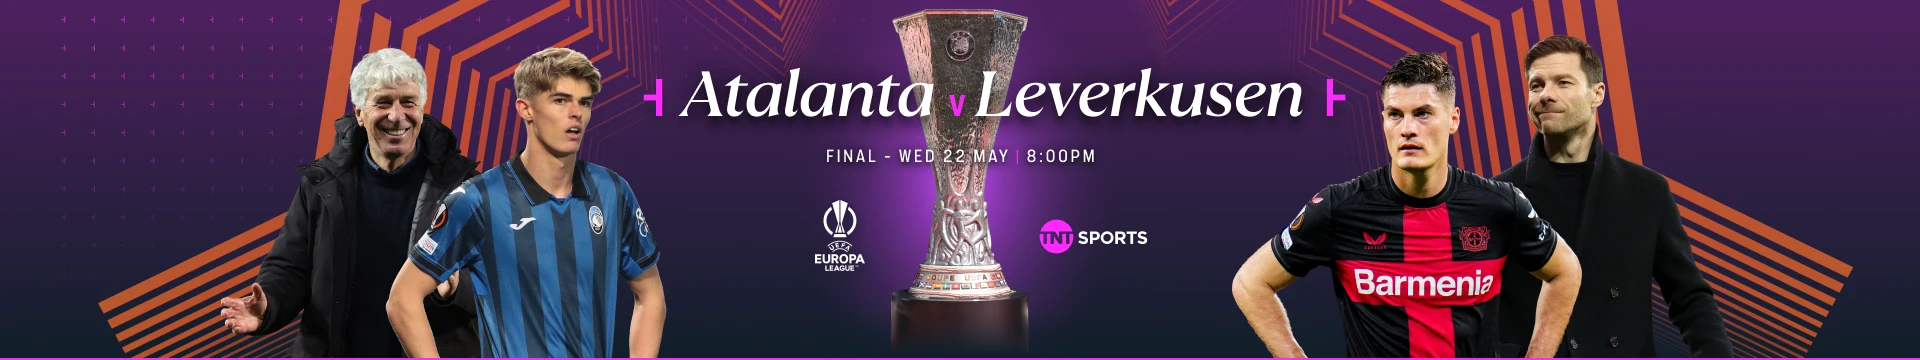 UEFA Europa League Final: Atalanta v Leverkusen Wednesday 22 May at 8pm